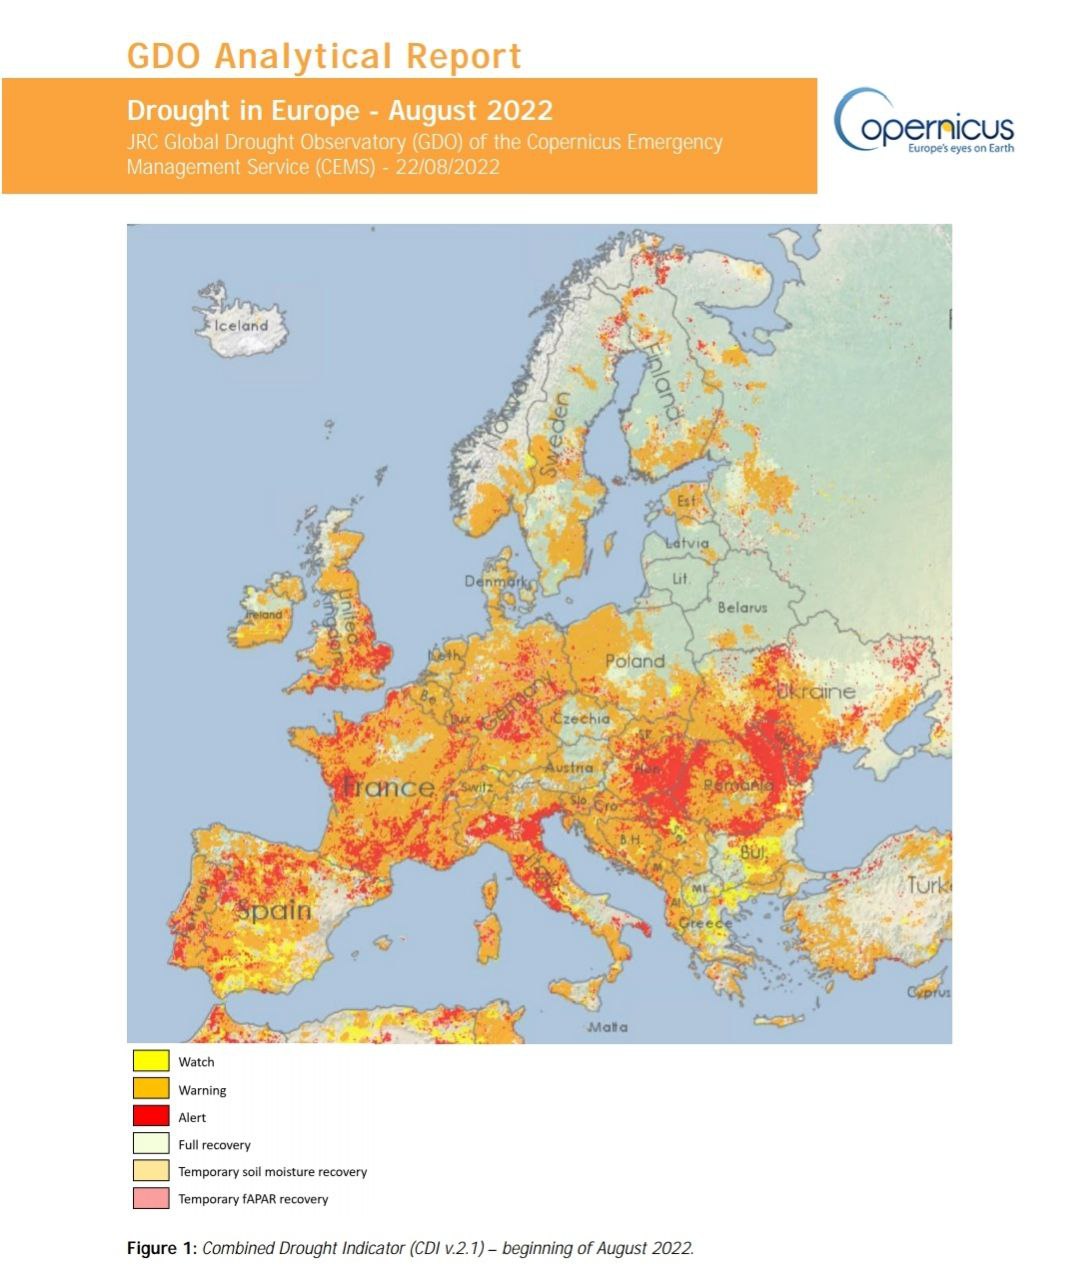 европа,ес,засуха в европе,засуха,засуха в ес,сильнейшая засуха